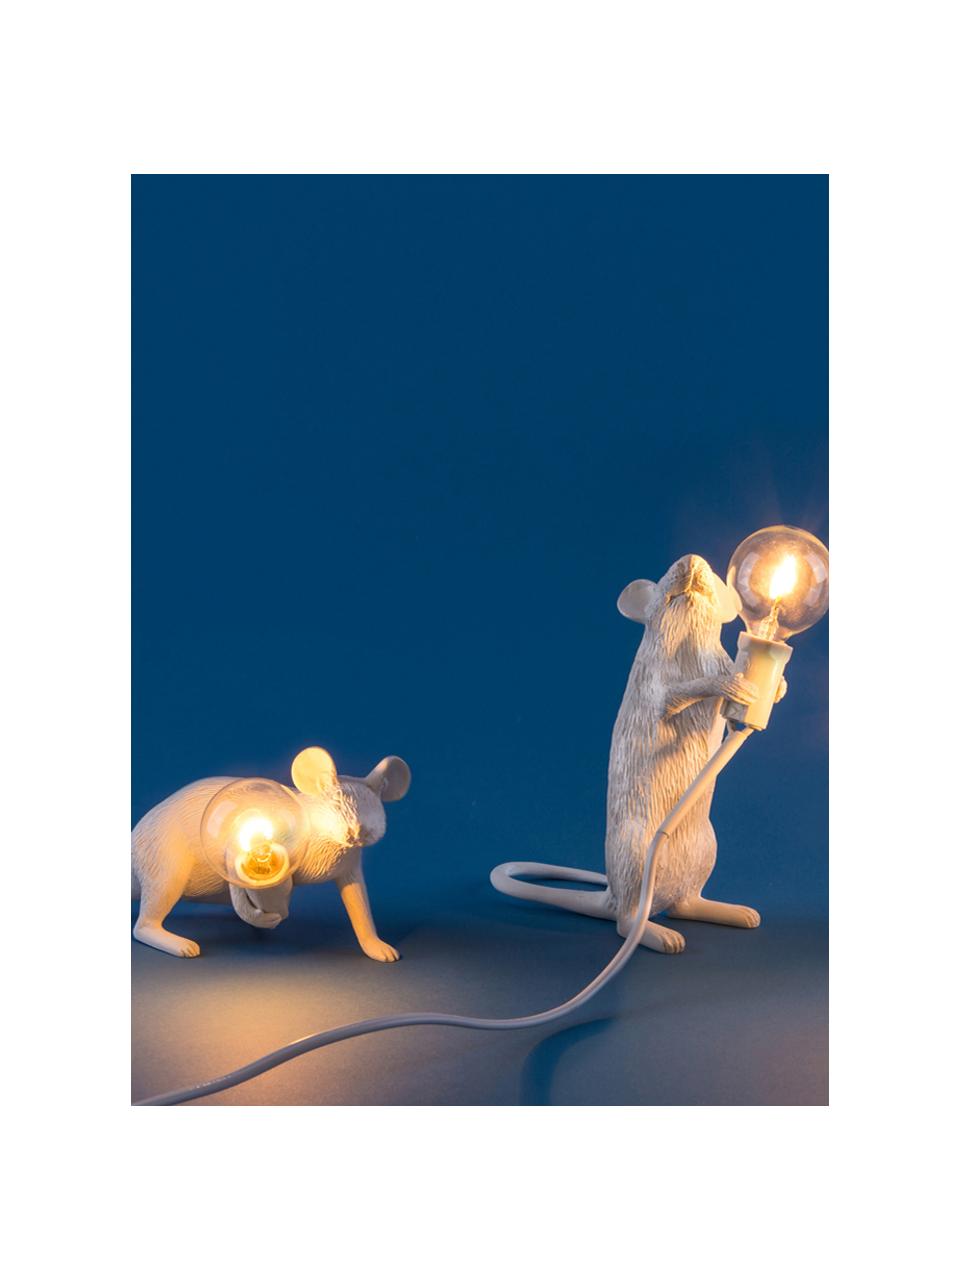 Design tafellamp Mouse, Kunsthars, Wit, 21 x 8 cm